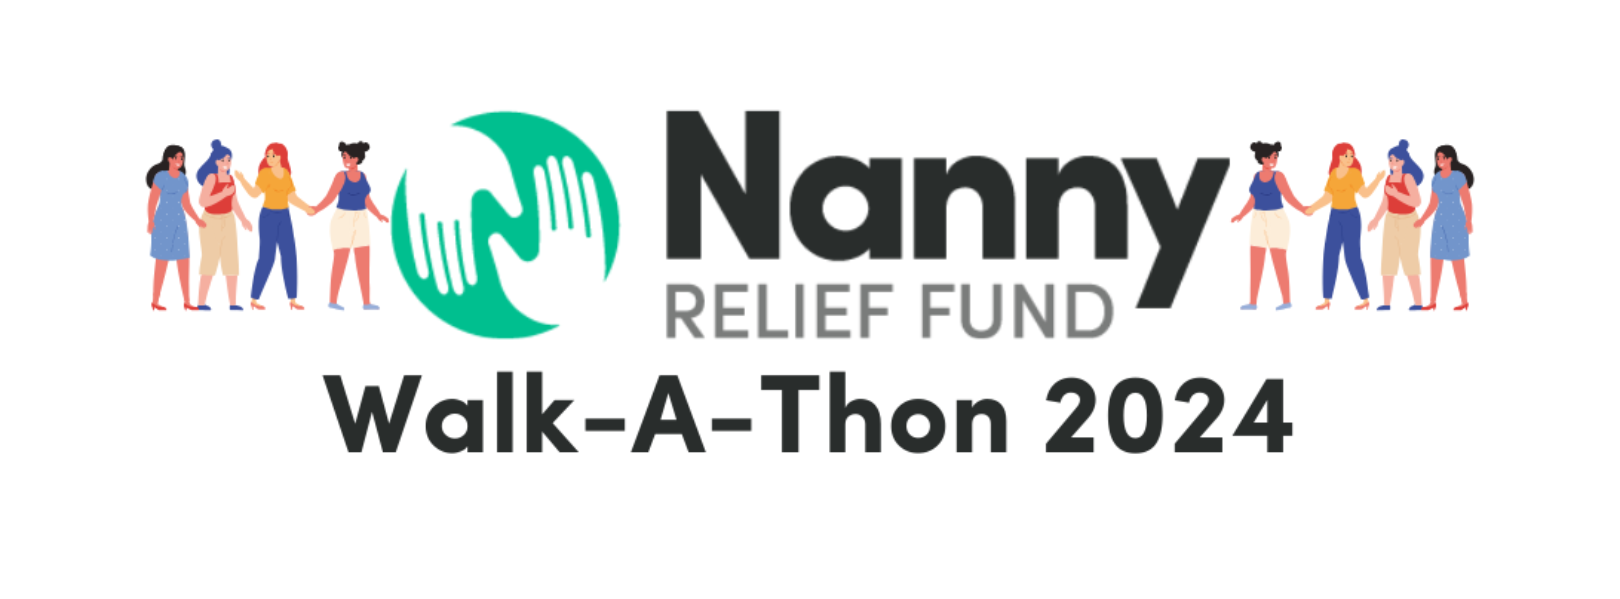 Nanny Relief Fund